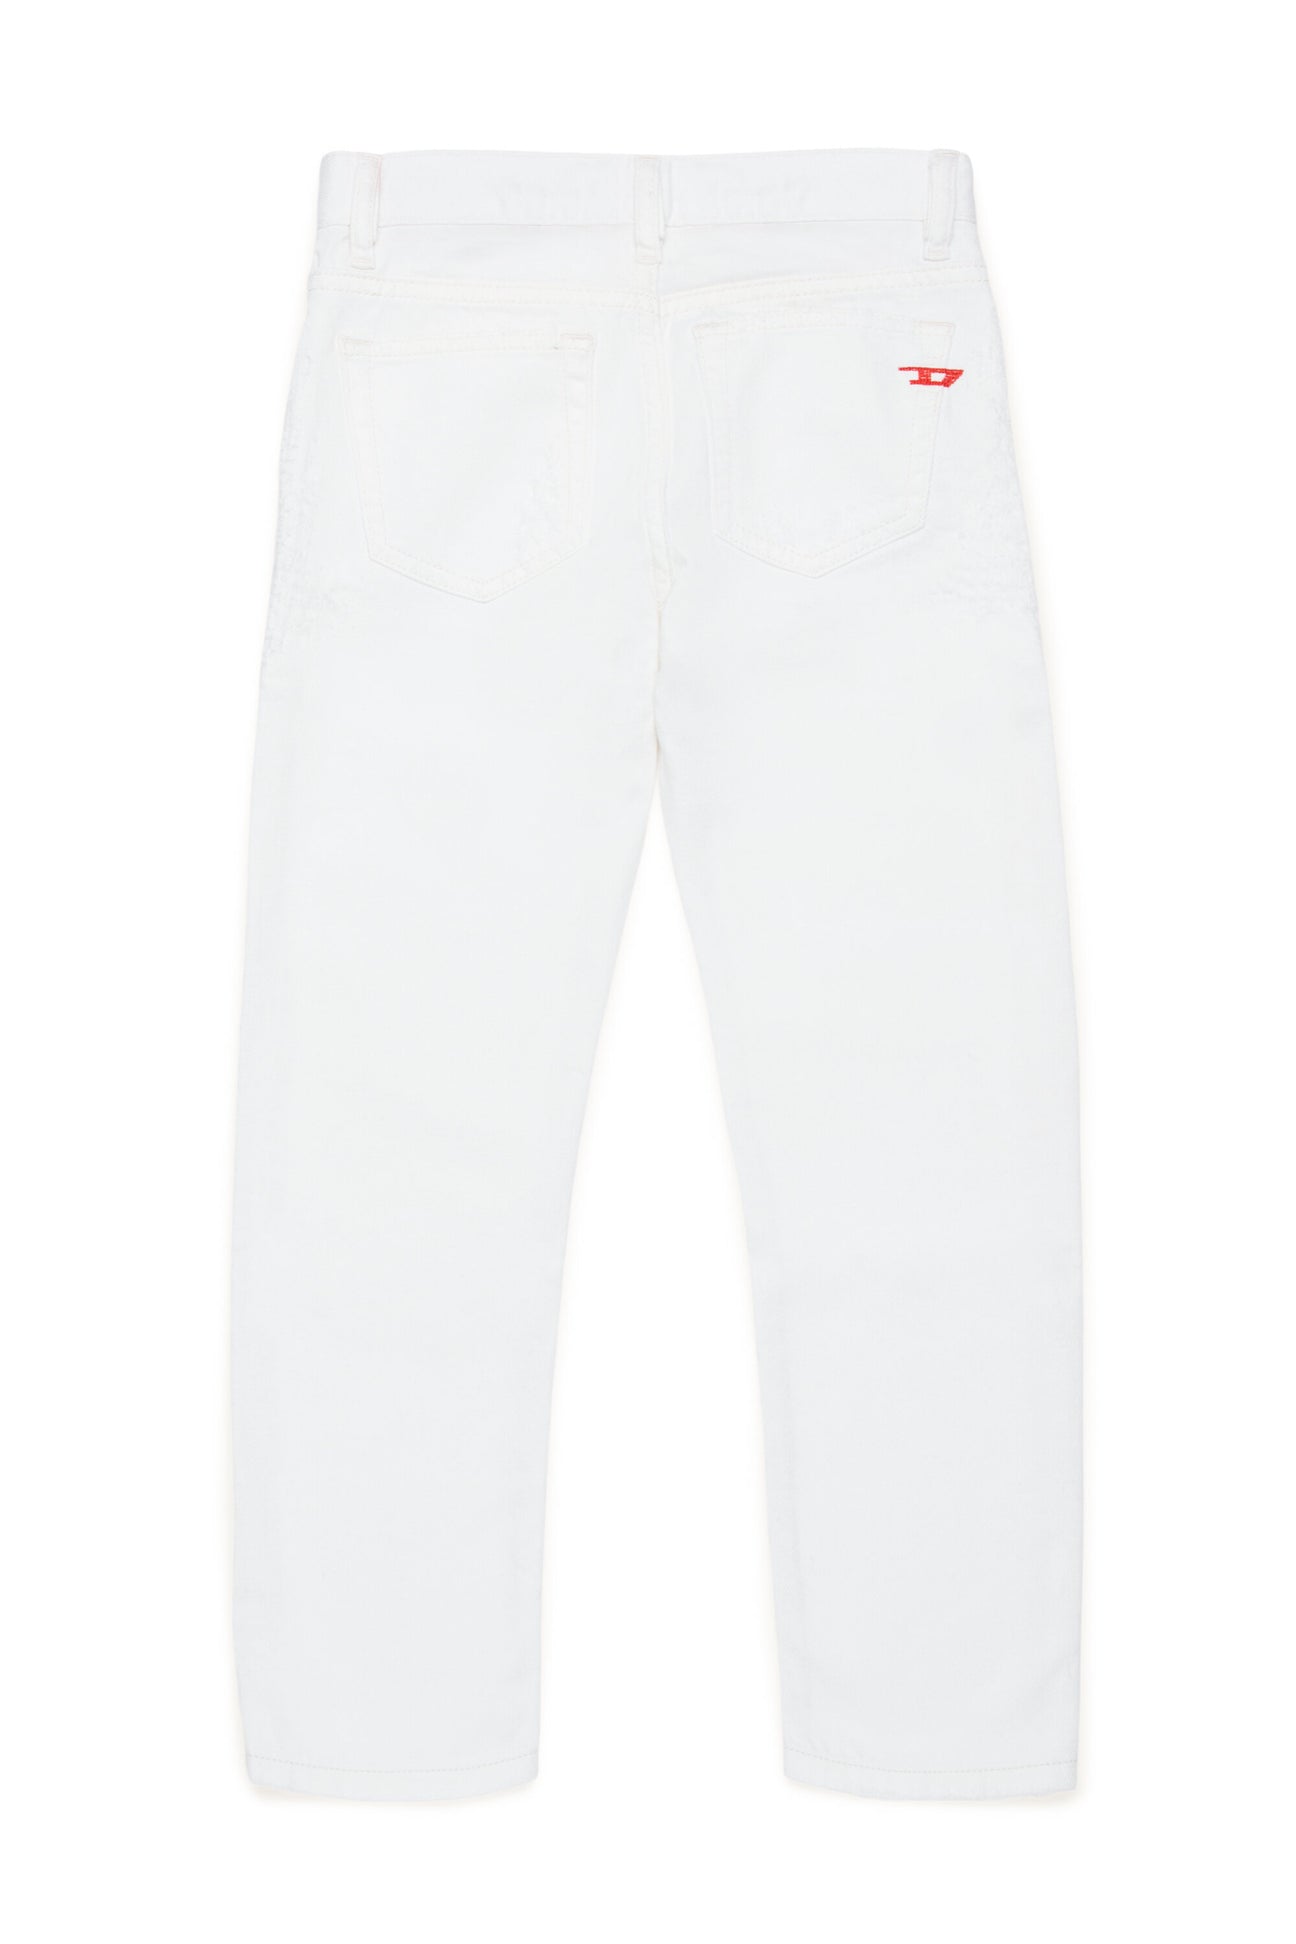 Jeans straight bianco con abrasioni - 2020 D-Viker Jeans straight bianco con abrasioni - 2020 D-Viker